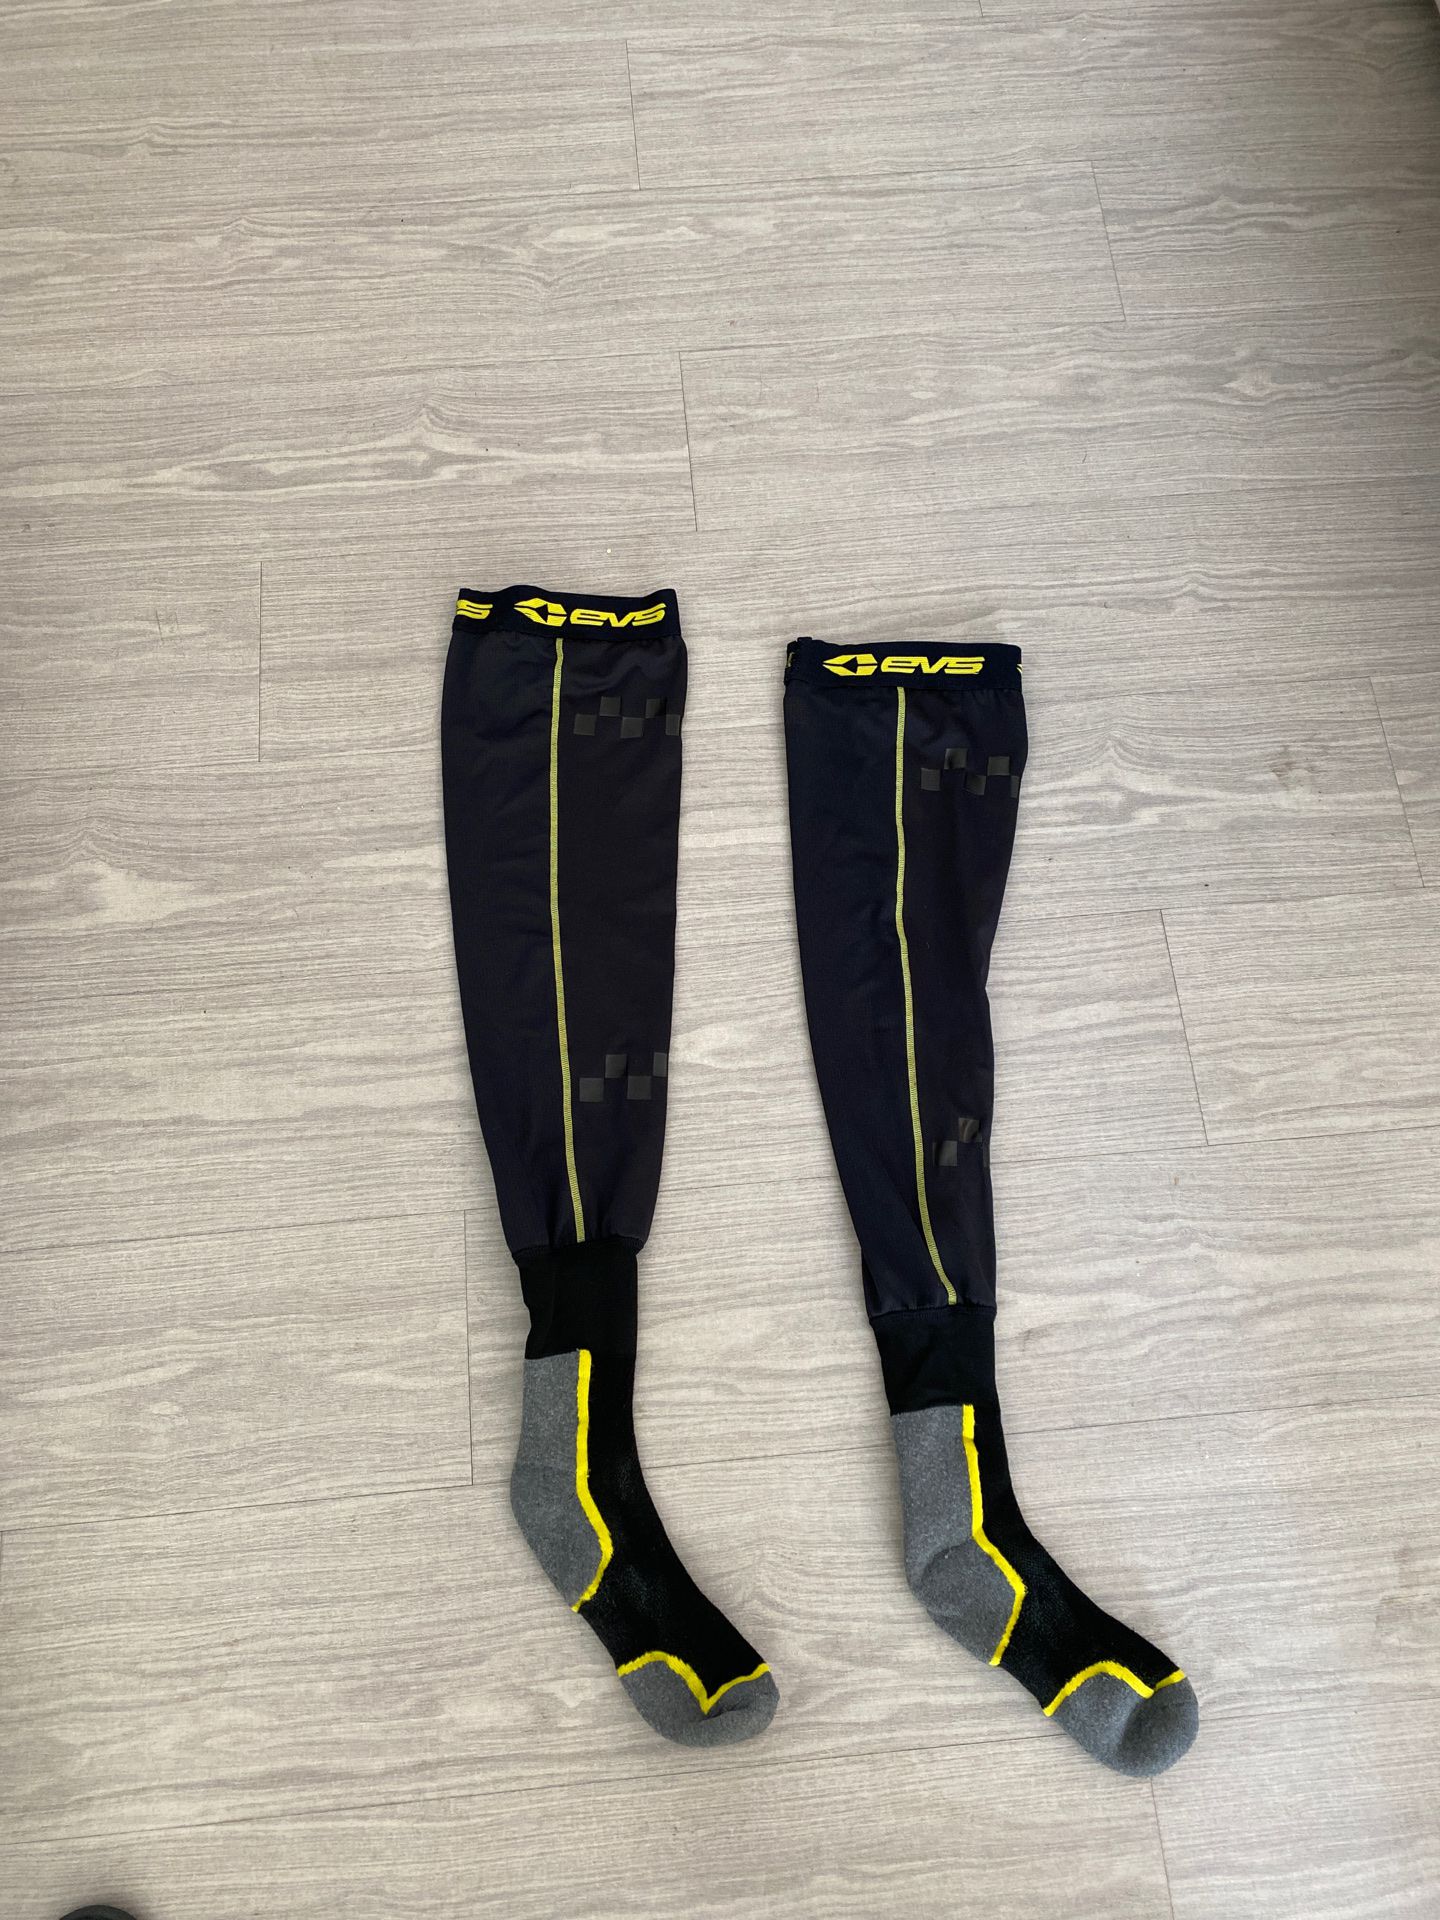 Evs long socks size L/XL